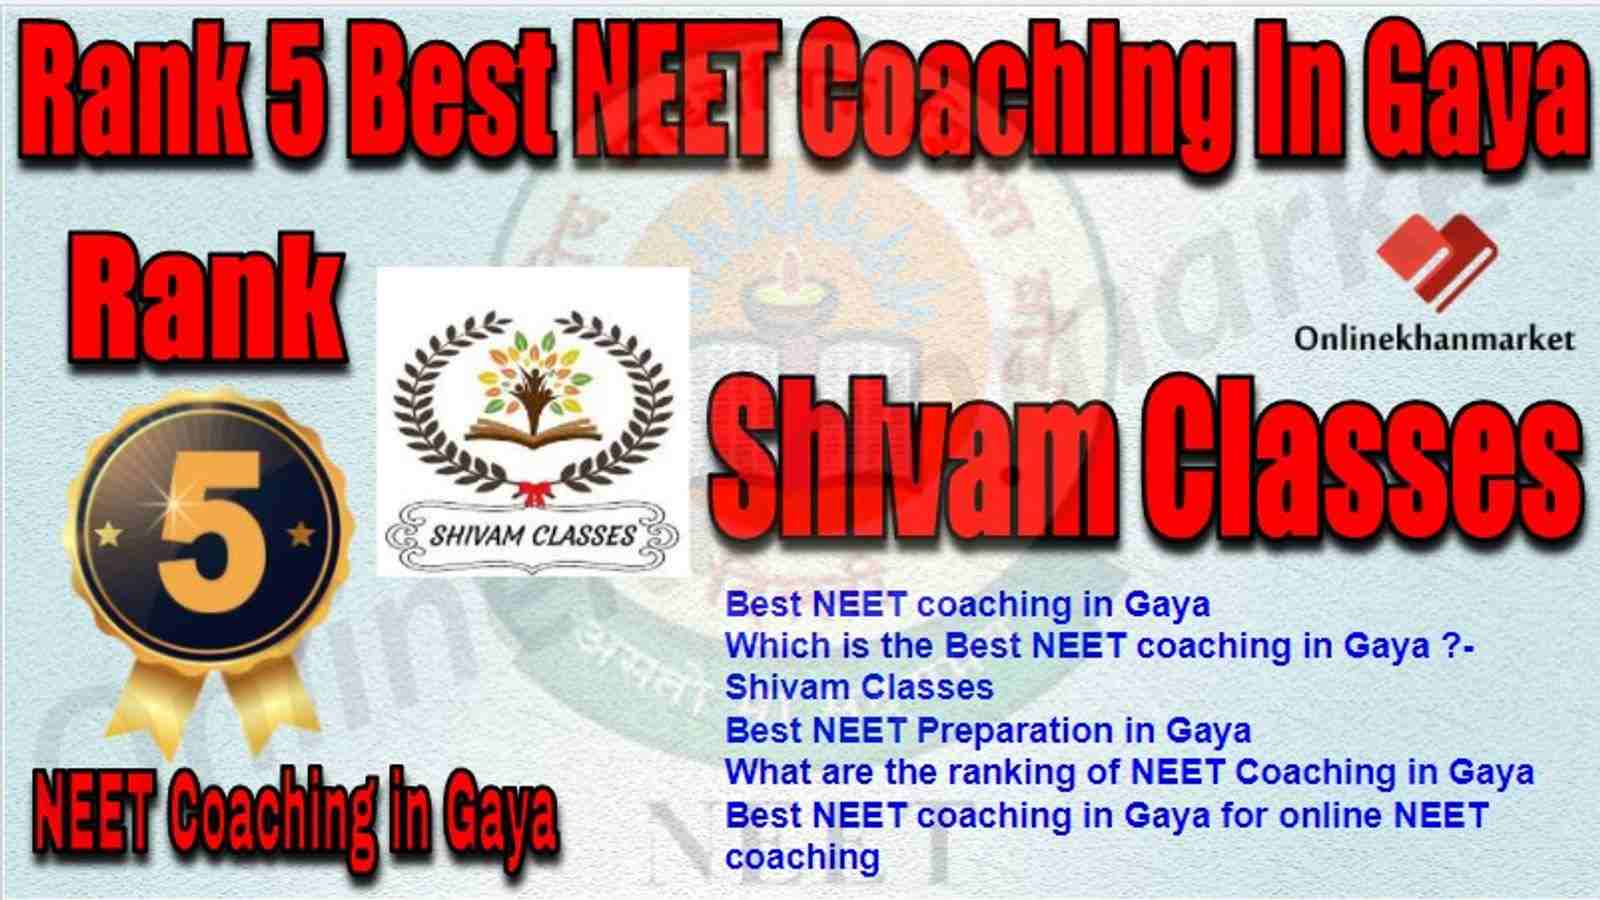 Rank 5 Best NEET Coaching Gaya